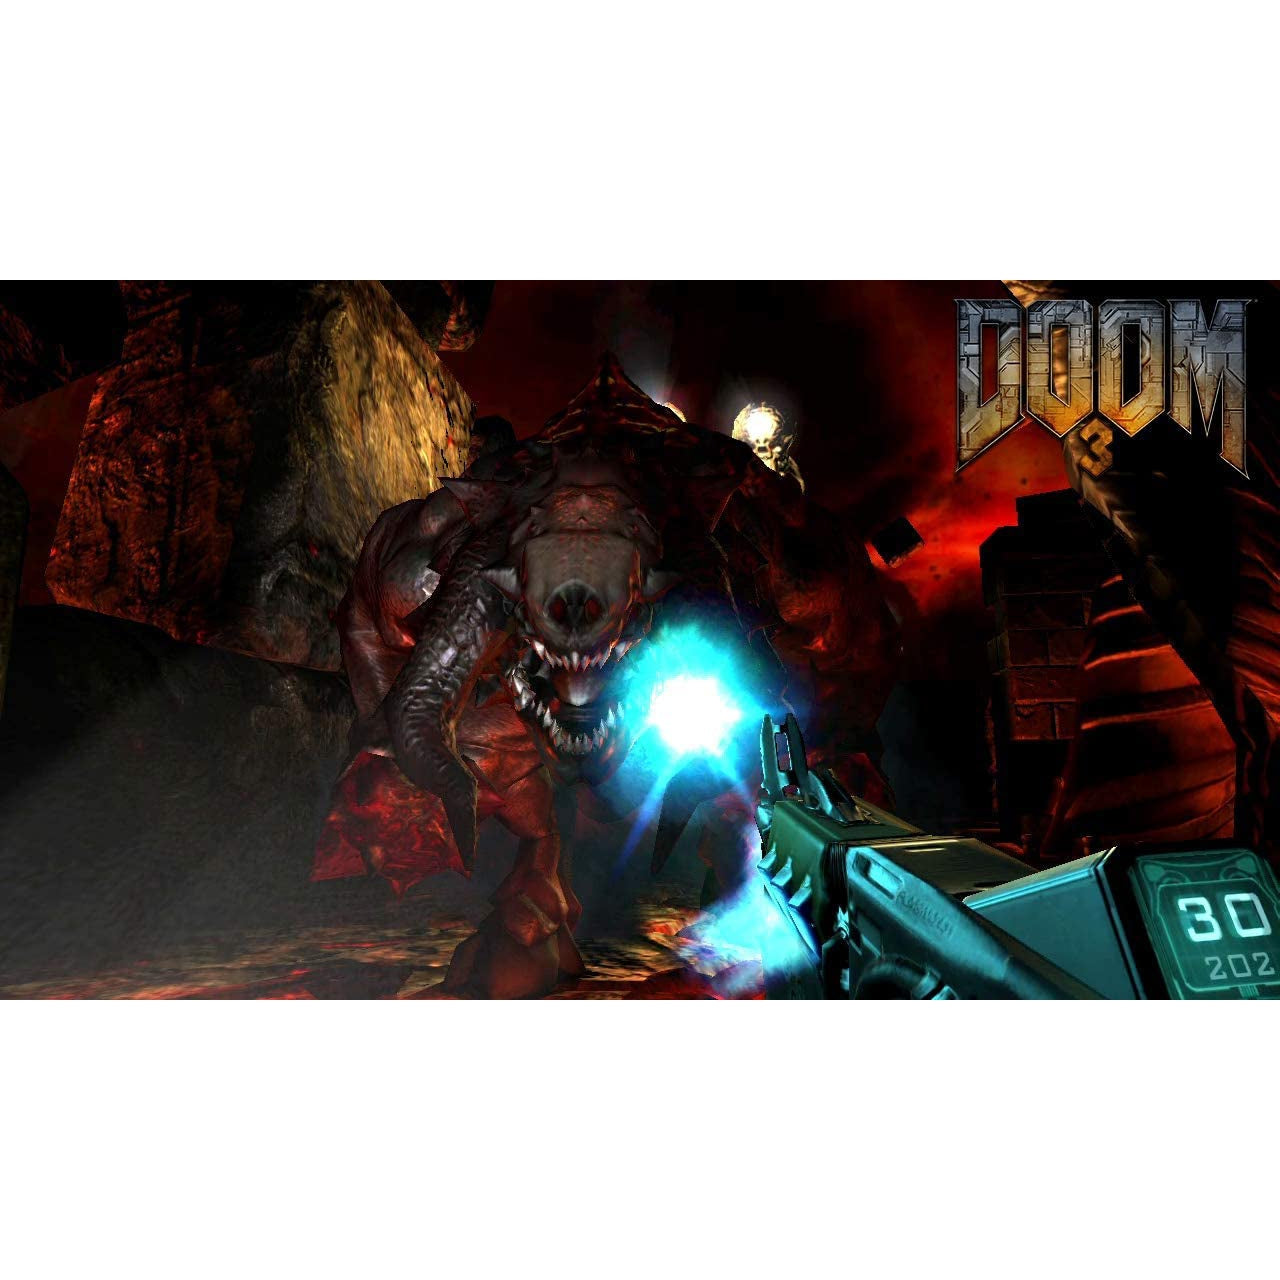 Doom Slayers Collection (Xbox One)